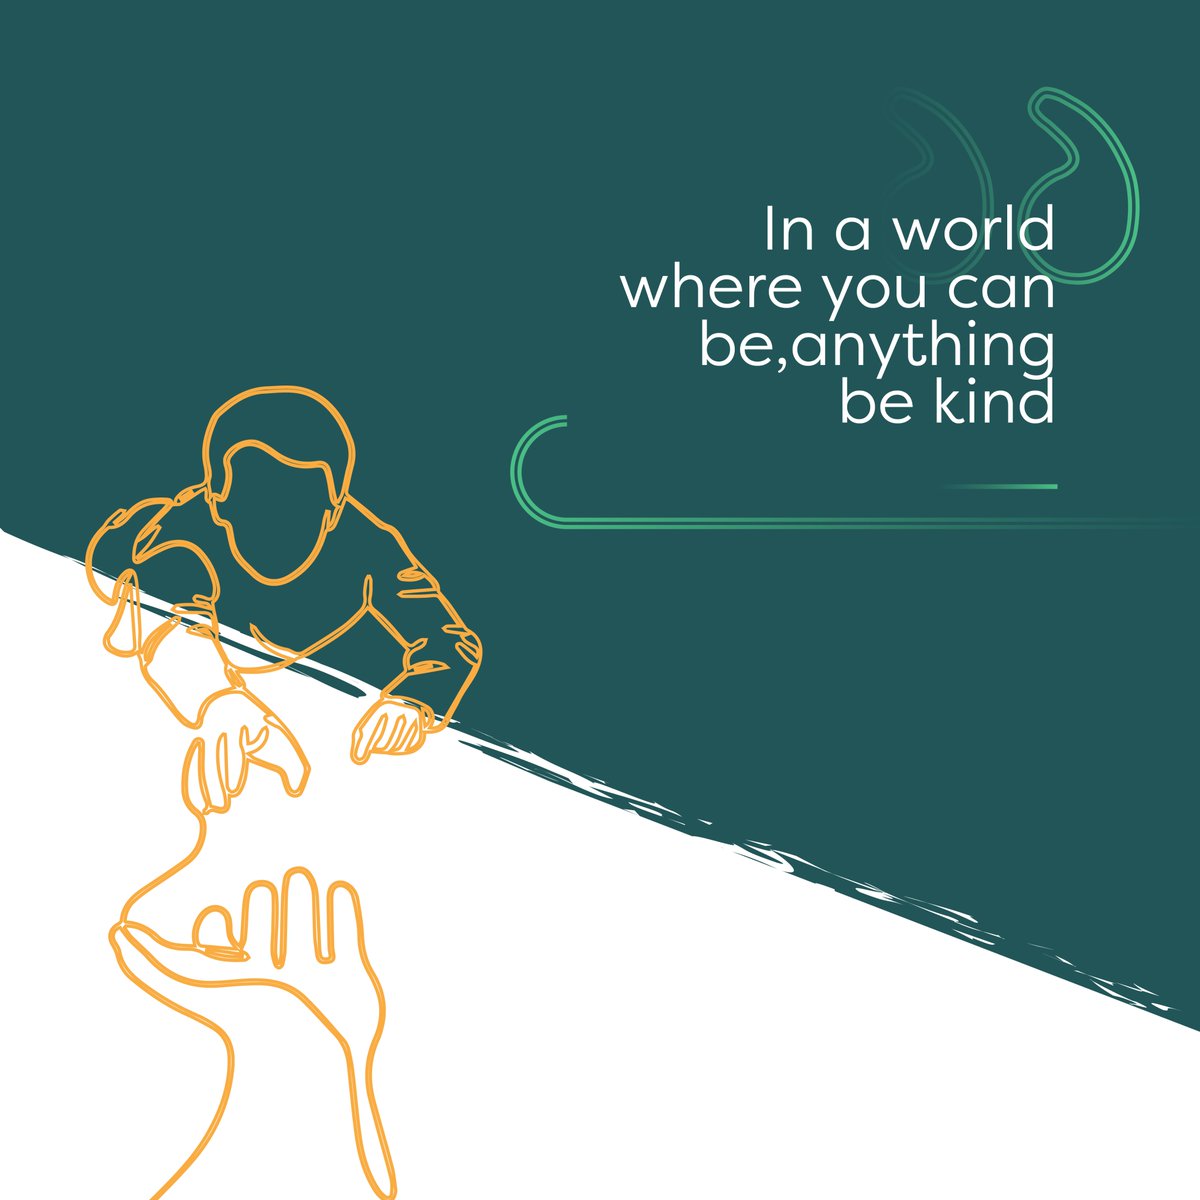 Be kind, always. 💙

#KindnessMatters #SpreadLove #BeTheChange #InspirePositivity #ActsOfKindness #ChooseKindness #WorldOfKindness #BeKindAlways #ShareTheGoodness #LoveAndCompassion